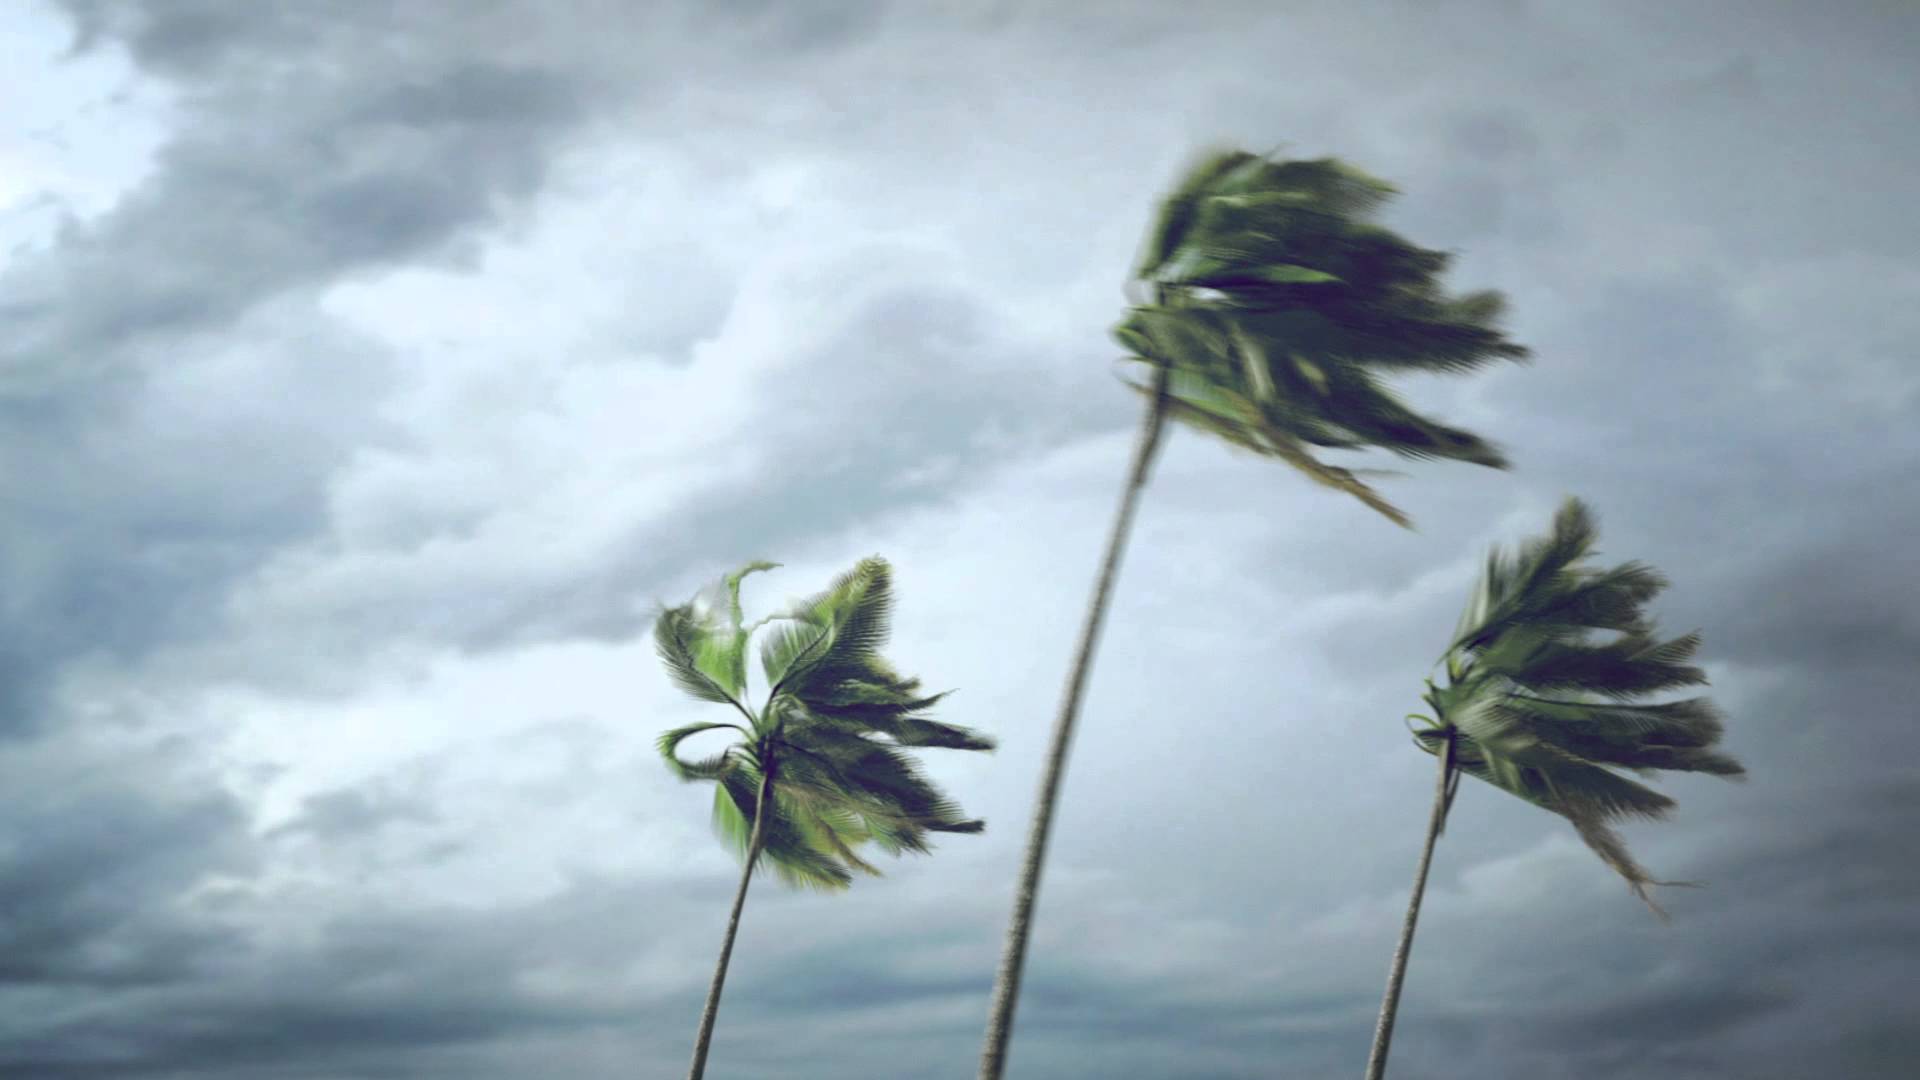 Hurricane Season in Cayman Islands lasts June 1 thru Nov 30 - Are you Prepared?